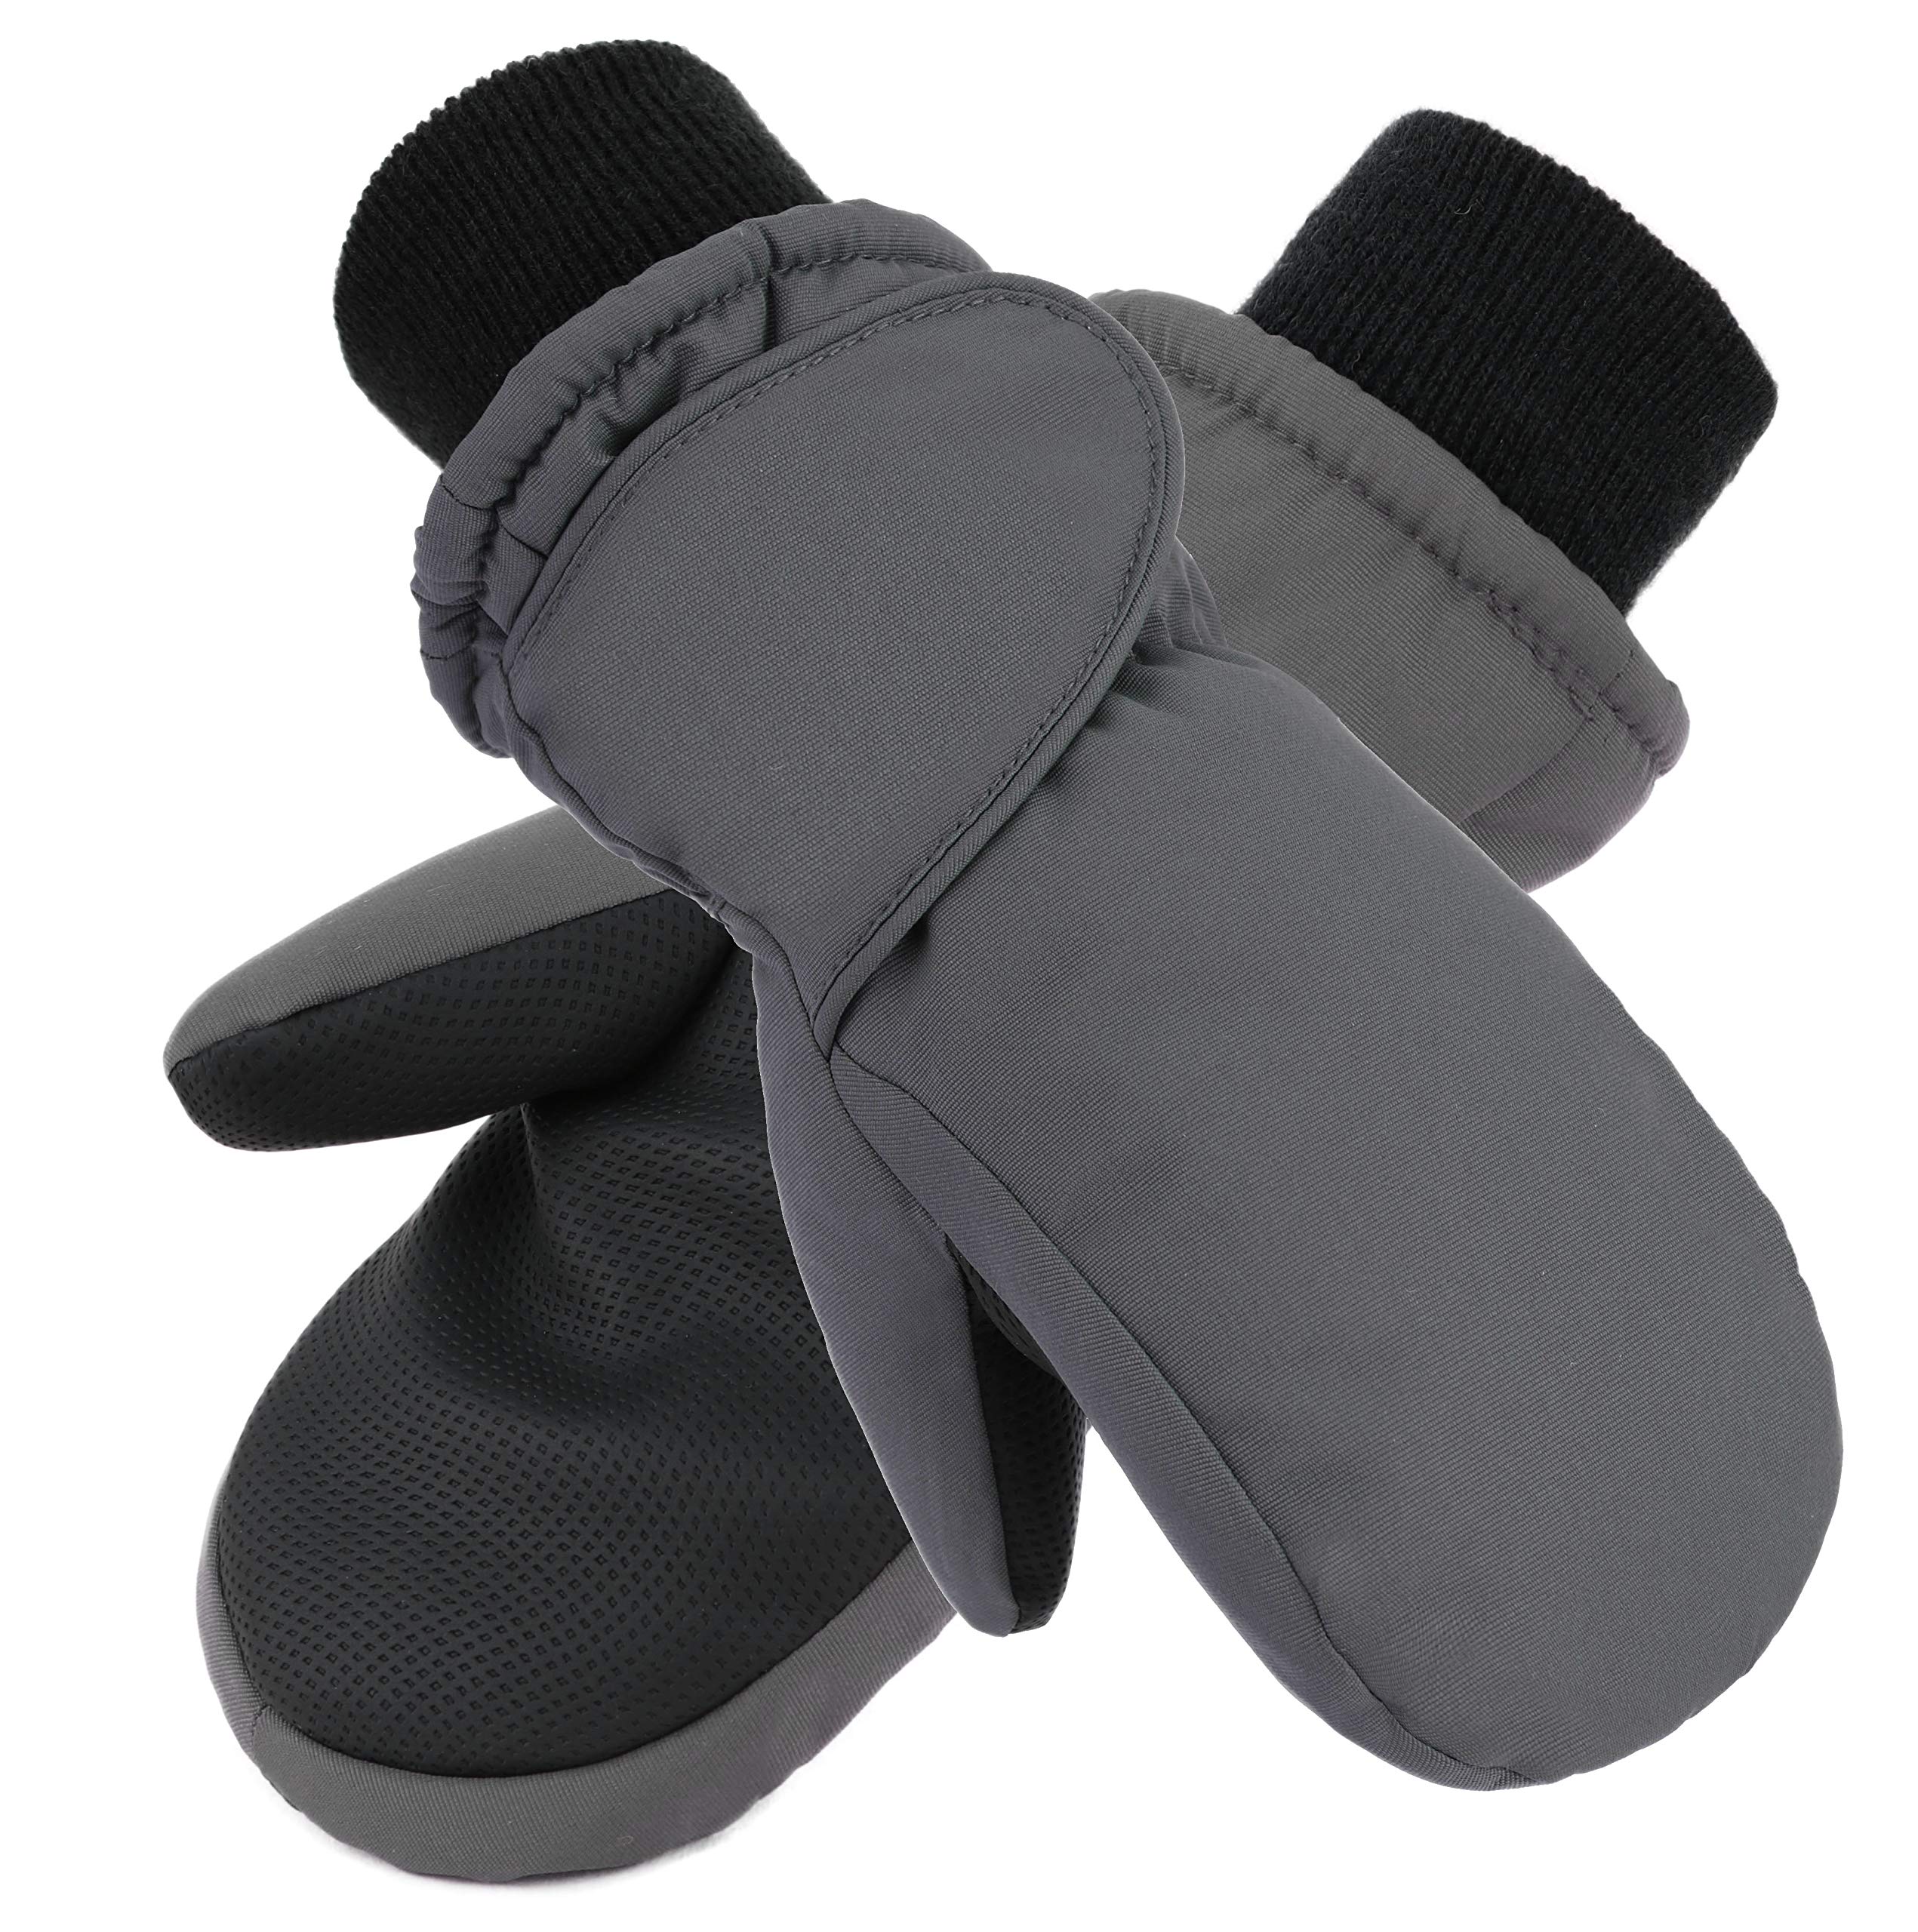 SimpliKids grils Toddler Winter gloves Sports Insulation Waterproof Ski Mittens,XS,grey